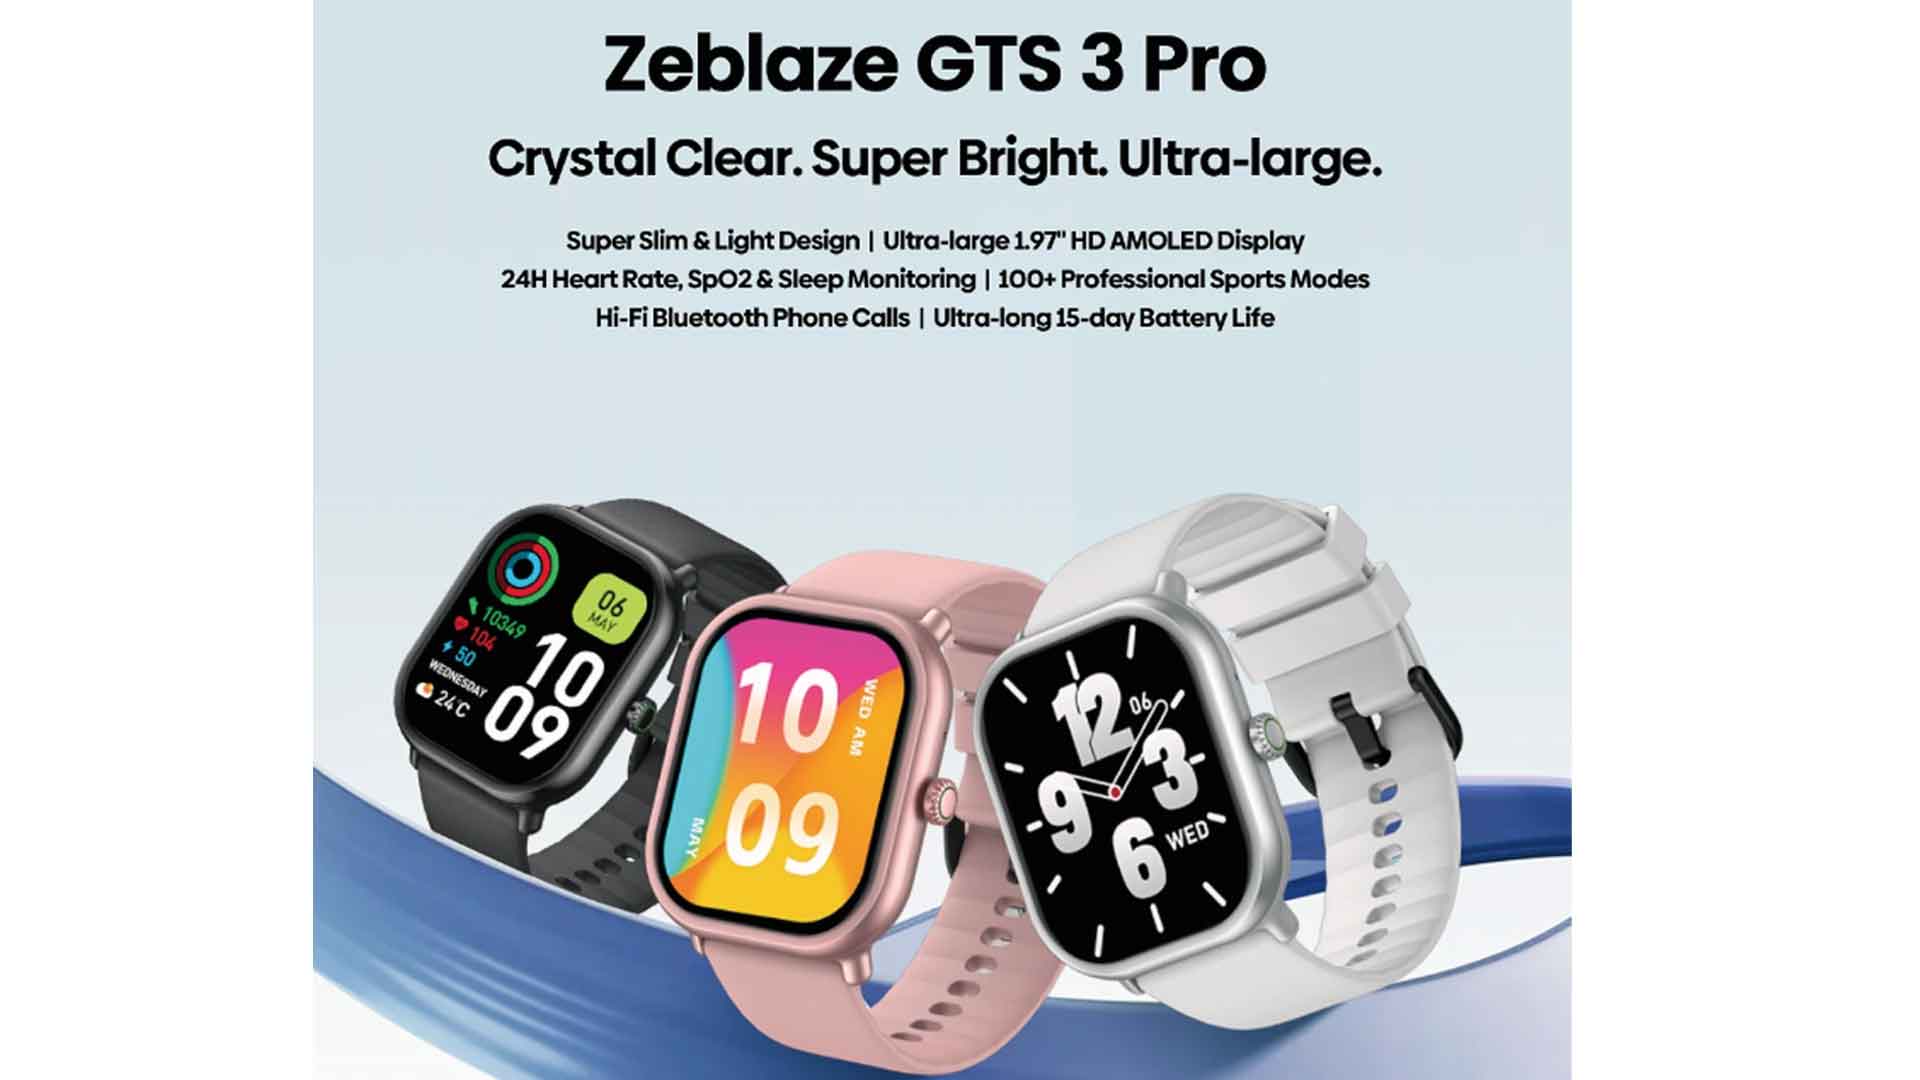 Zeblaze GTS 3 Pro smartwatch features, review, specs, price